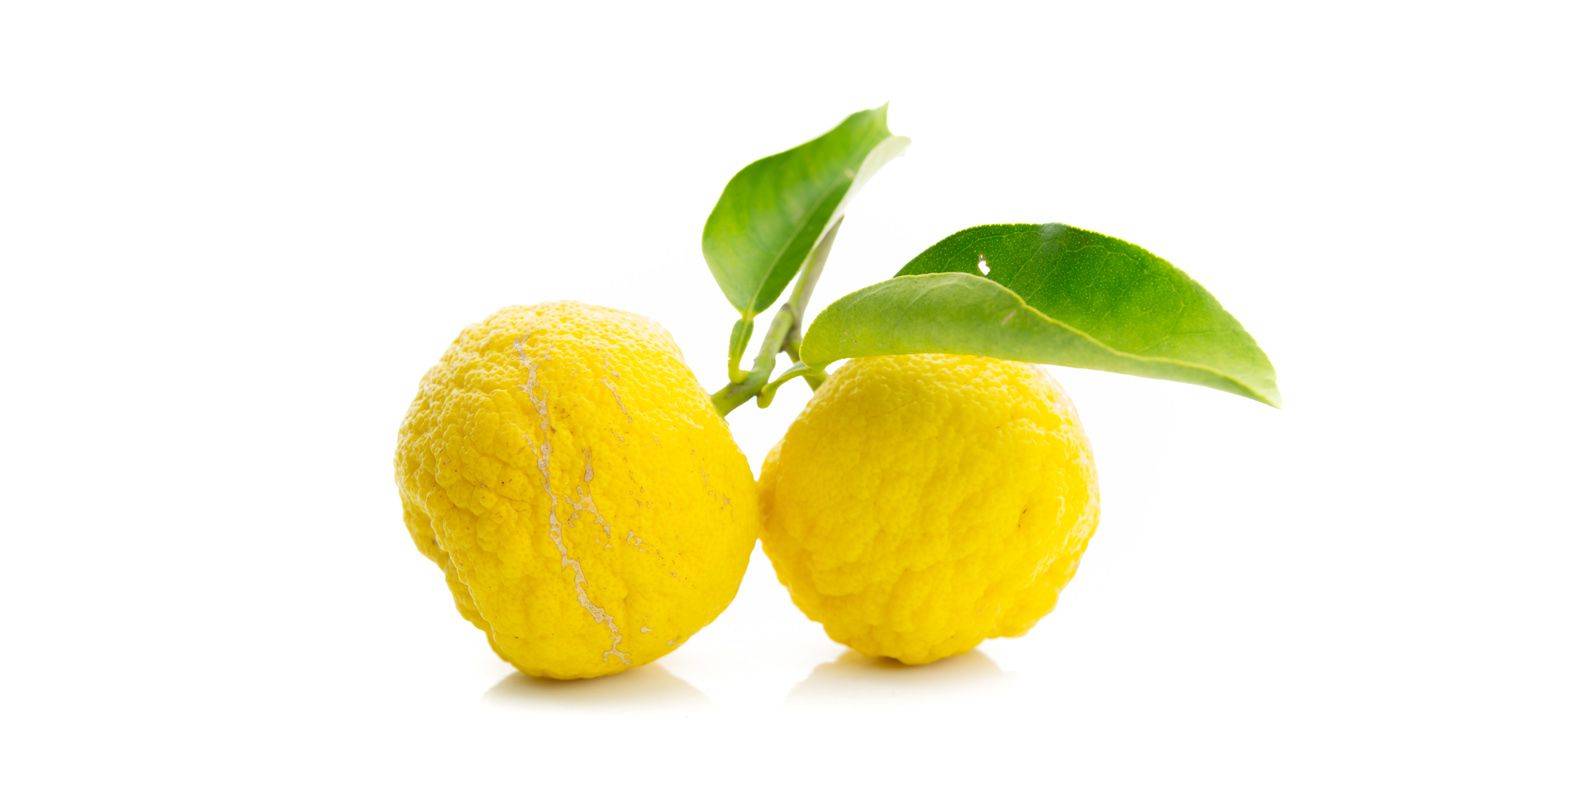 Юдзу или юзу японский лимон всезнайкин - агро журнал dachnye-fei.ru